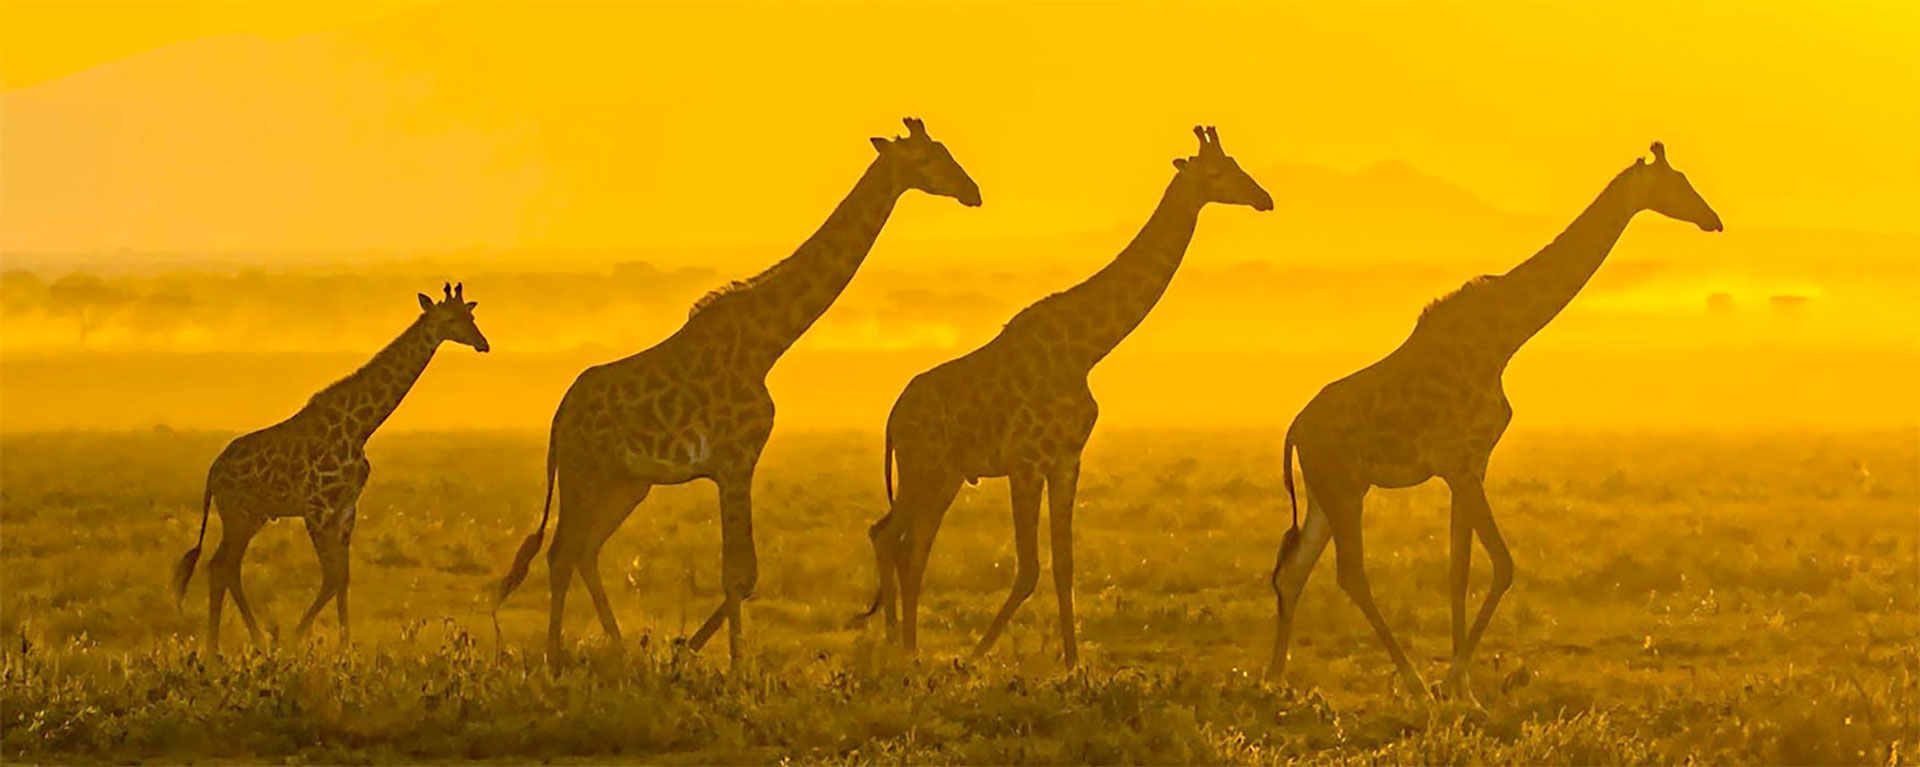 Giraffes walking at sunrise in the Serengeti, Tanzania